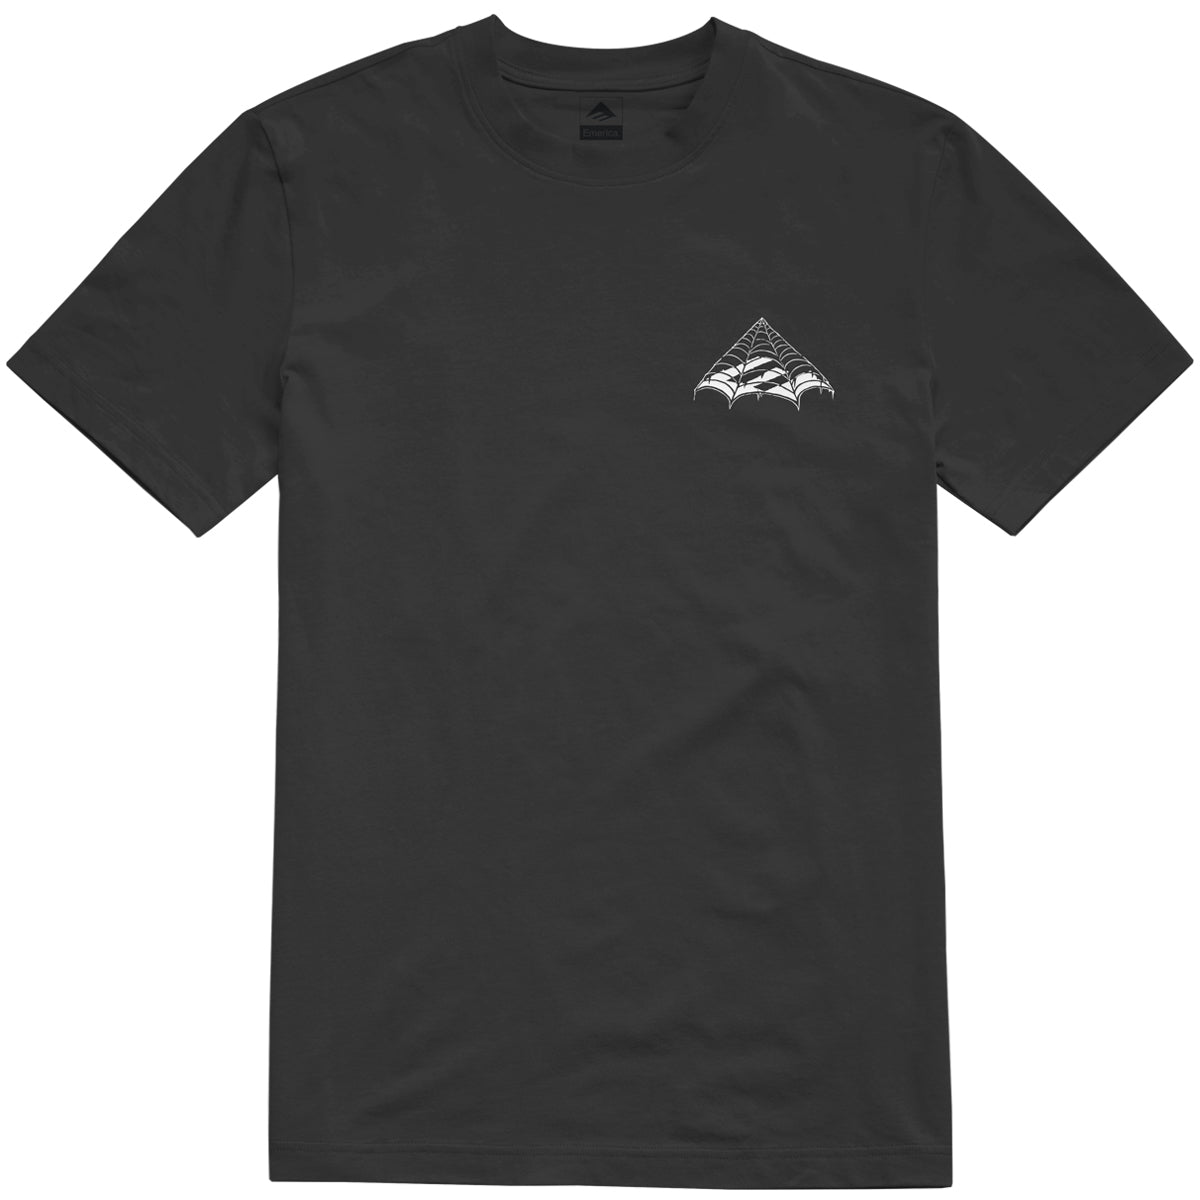 Emerica x Creature Triangle Web T-Shirt - Black image 1